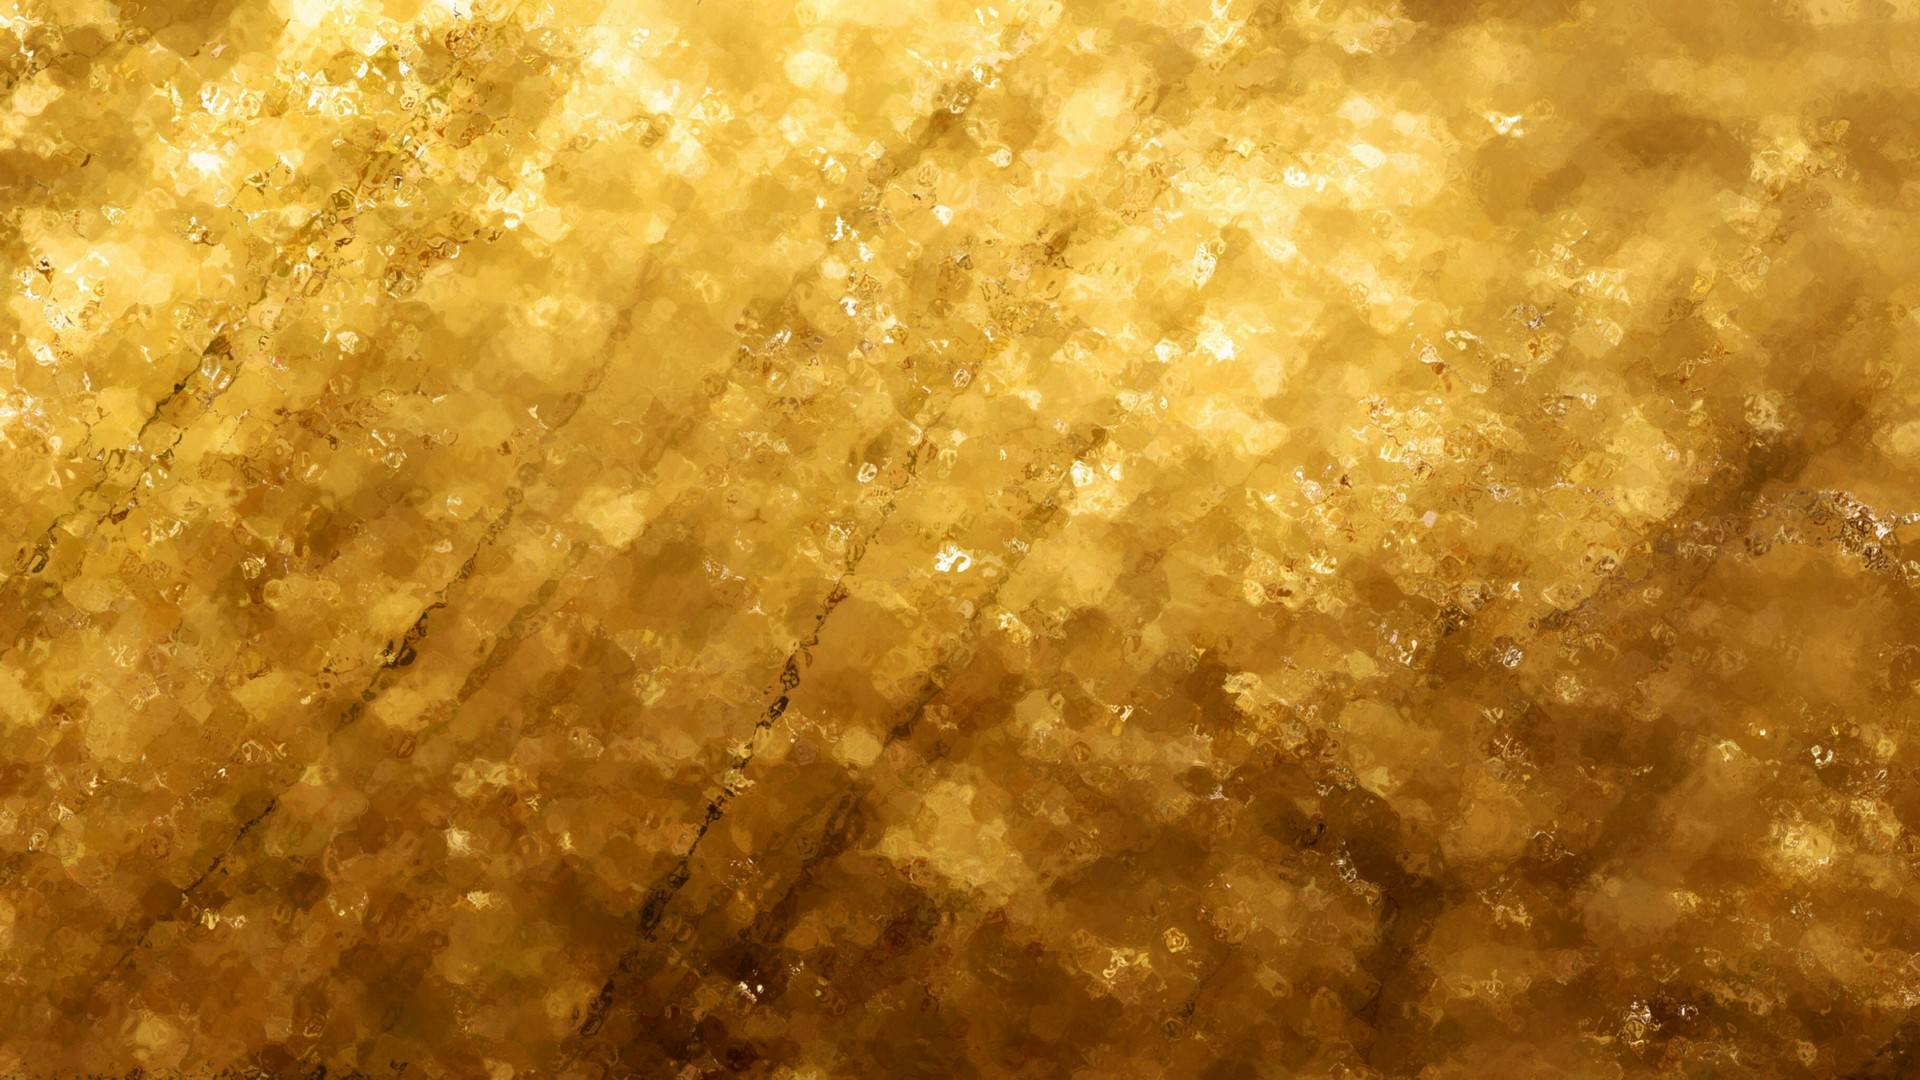 blurred gold background